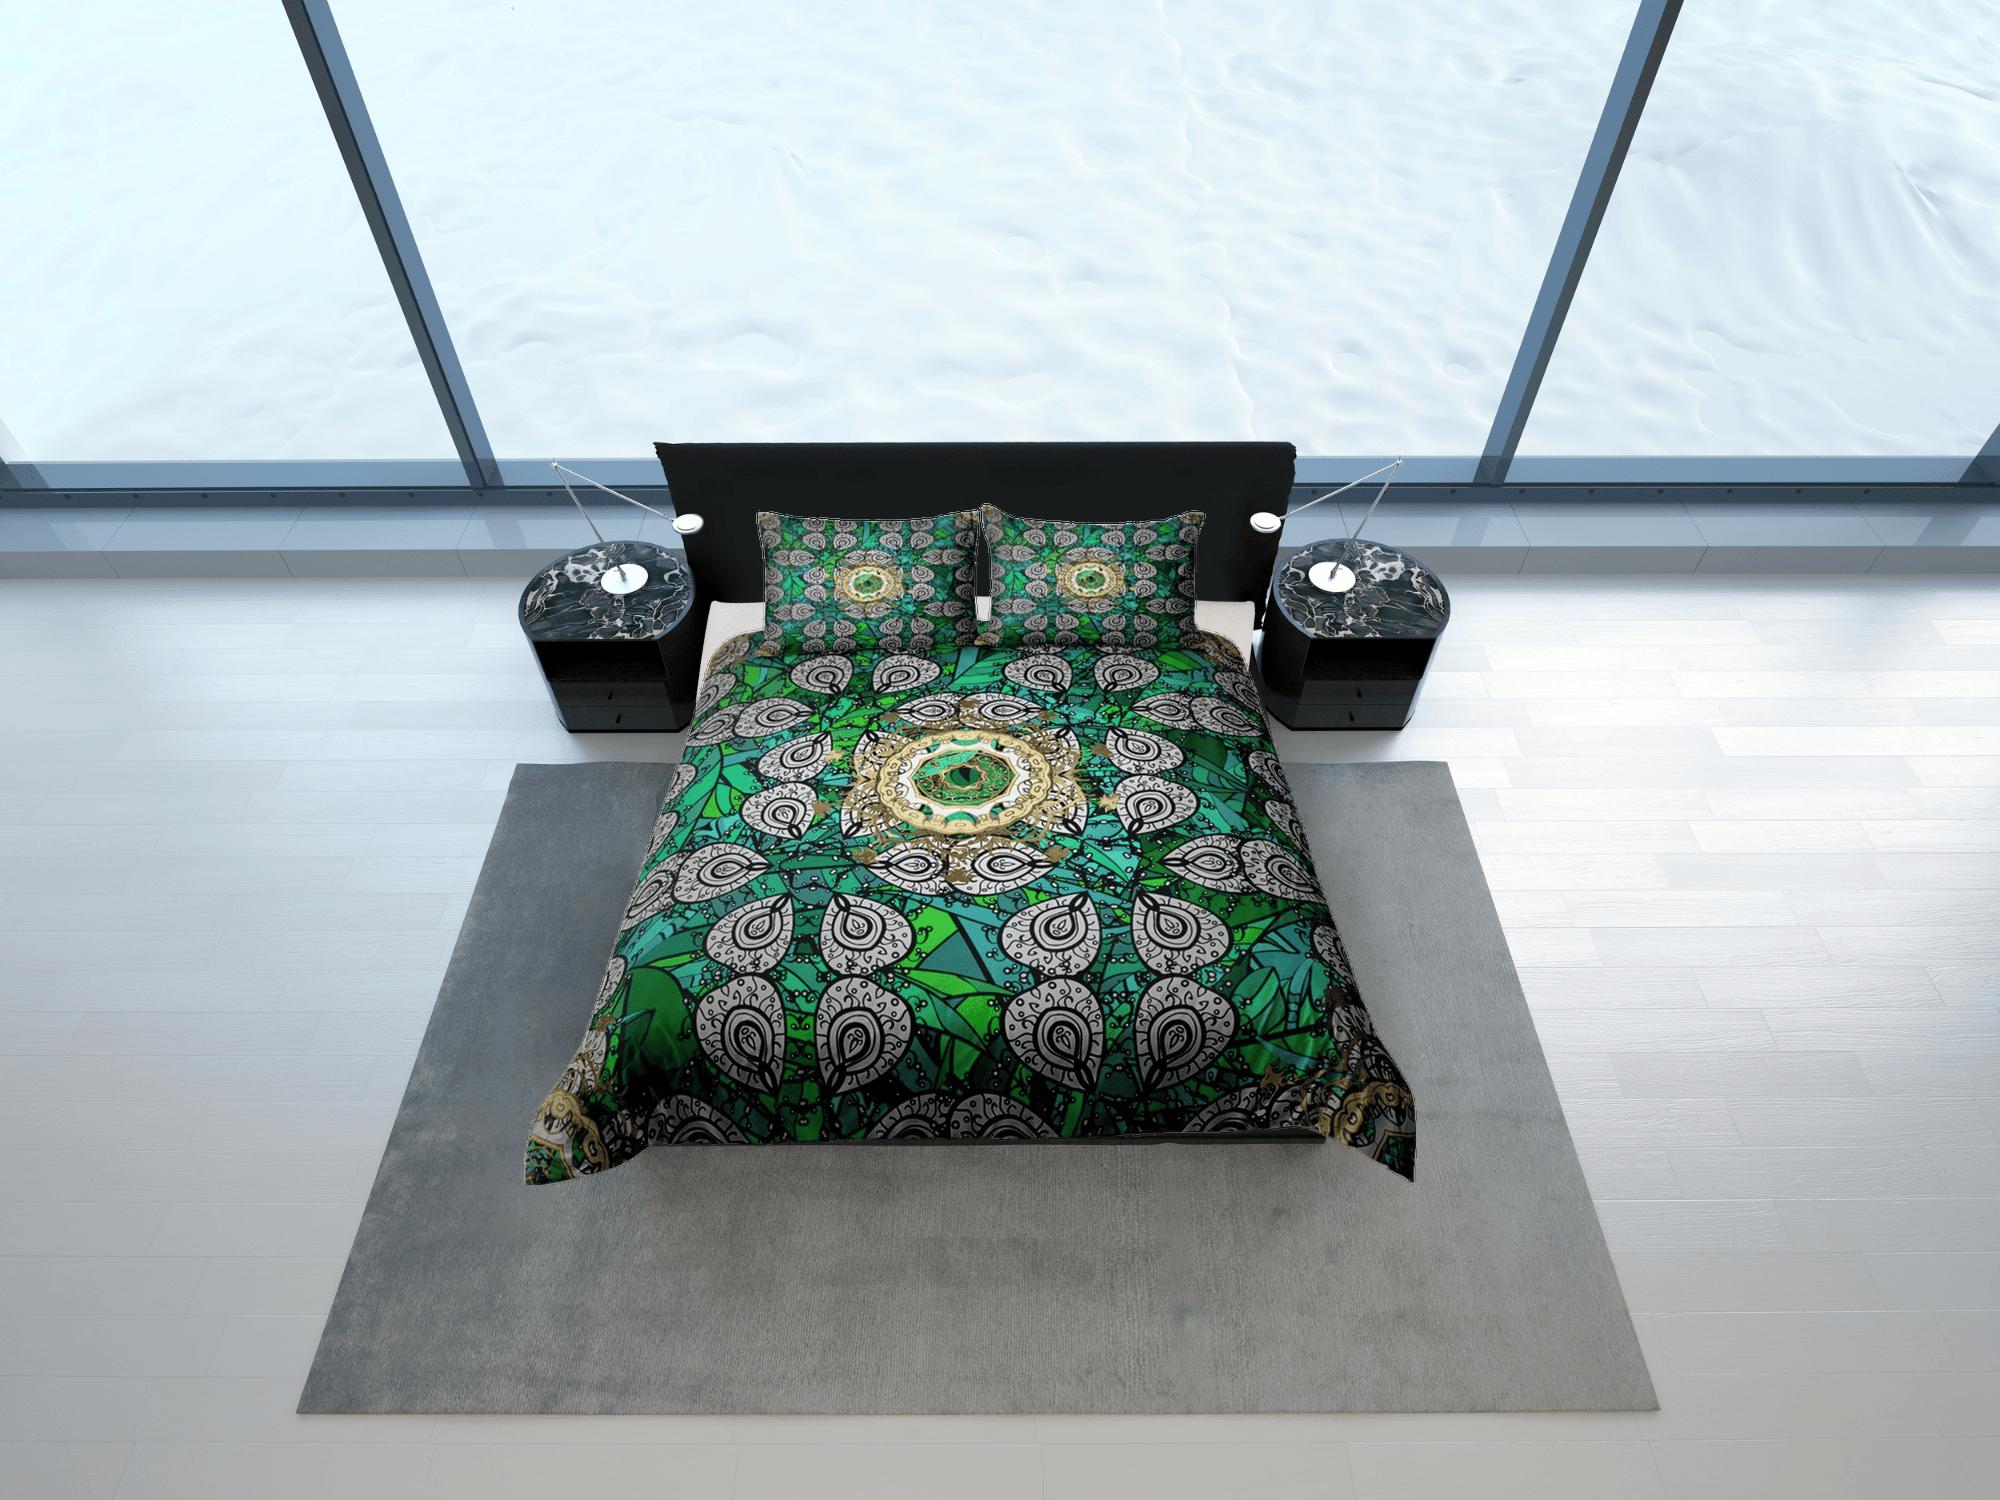 daintyduvet Emerald green whimsical african bedding set duvet cover, boho bedding ethnic tribal design, afrocentric designer bedding, south african gift